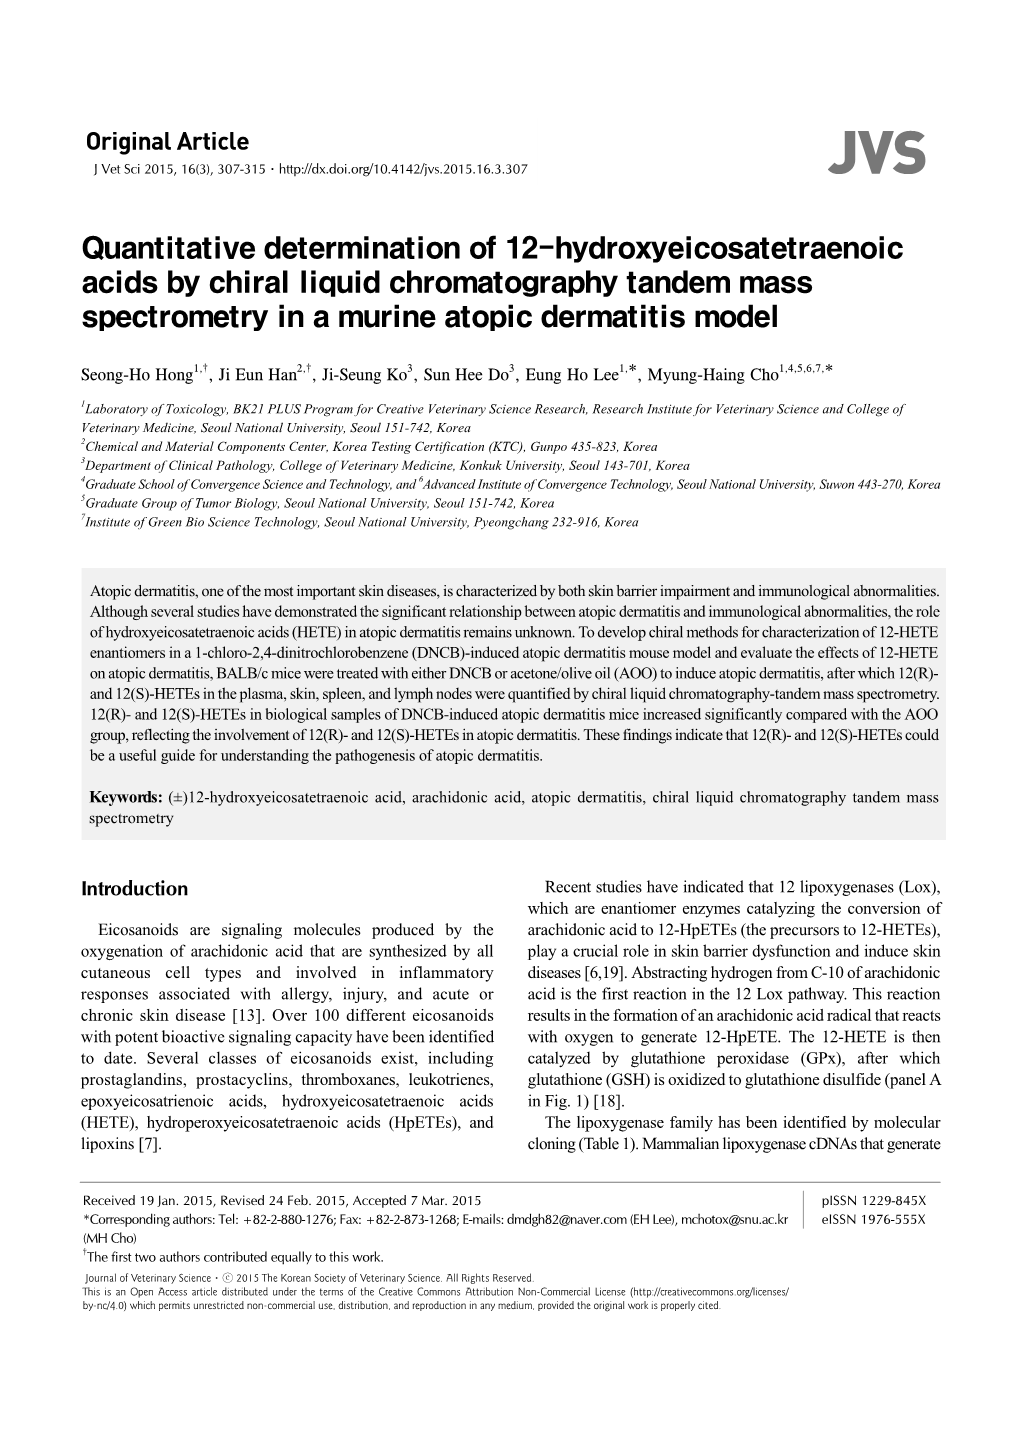 Quantitative Determination of 12-Hydroxyeicosatetraenoic Acids by Chiral Liquid Chromatography Tandem Mass Spectrometry in a Murine Atopic Dermatitis Model